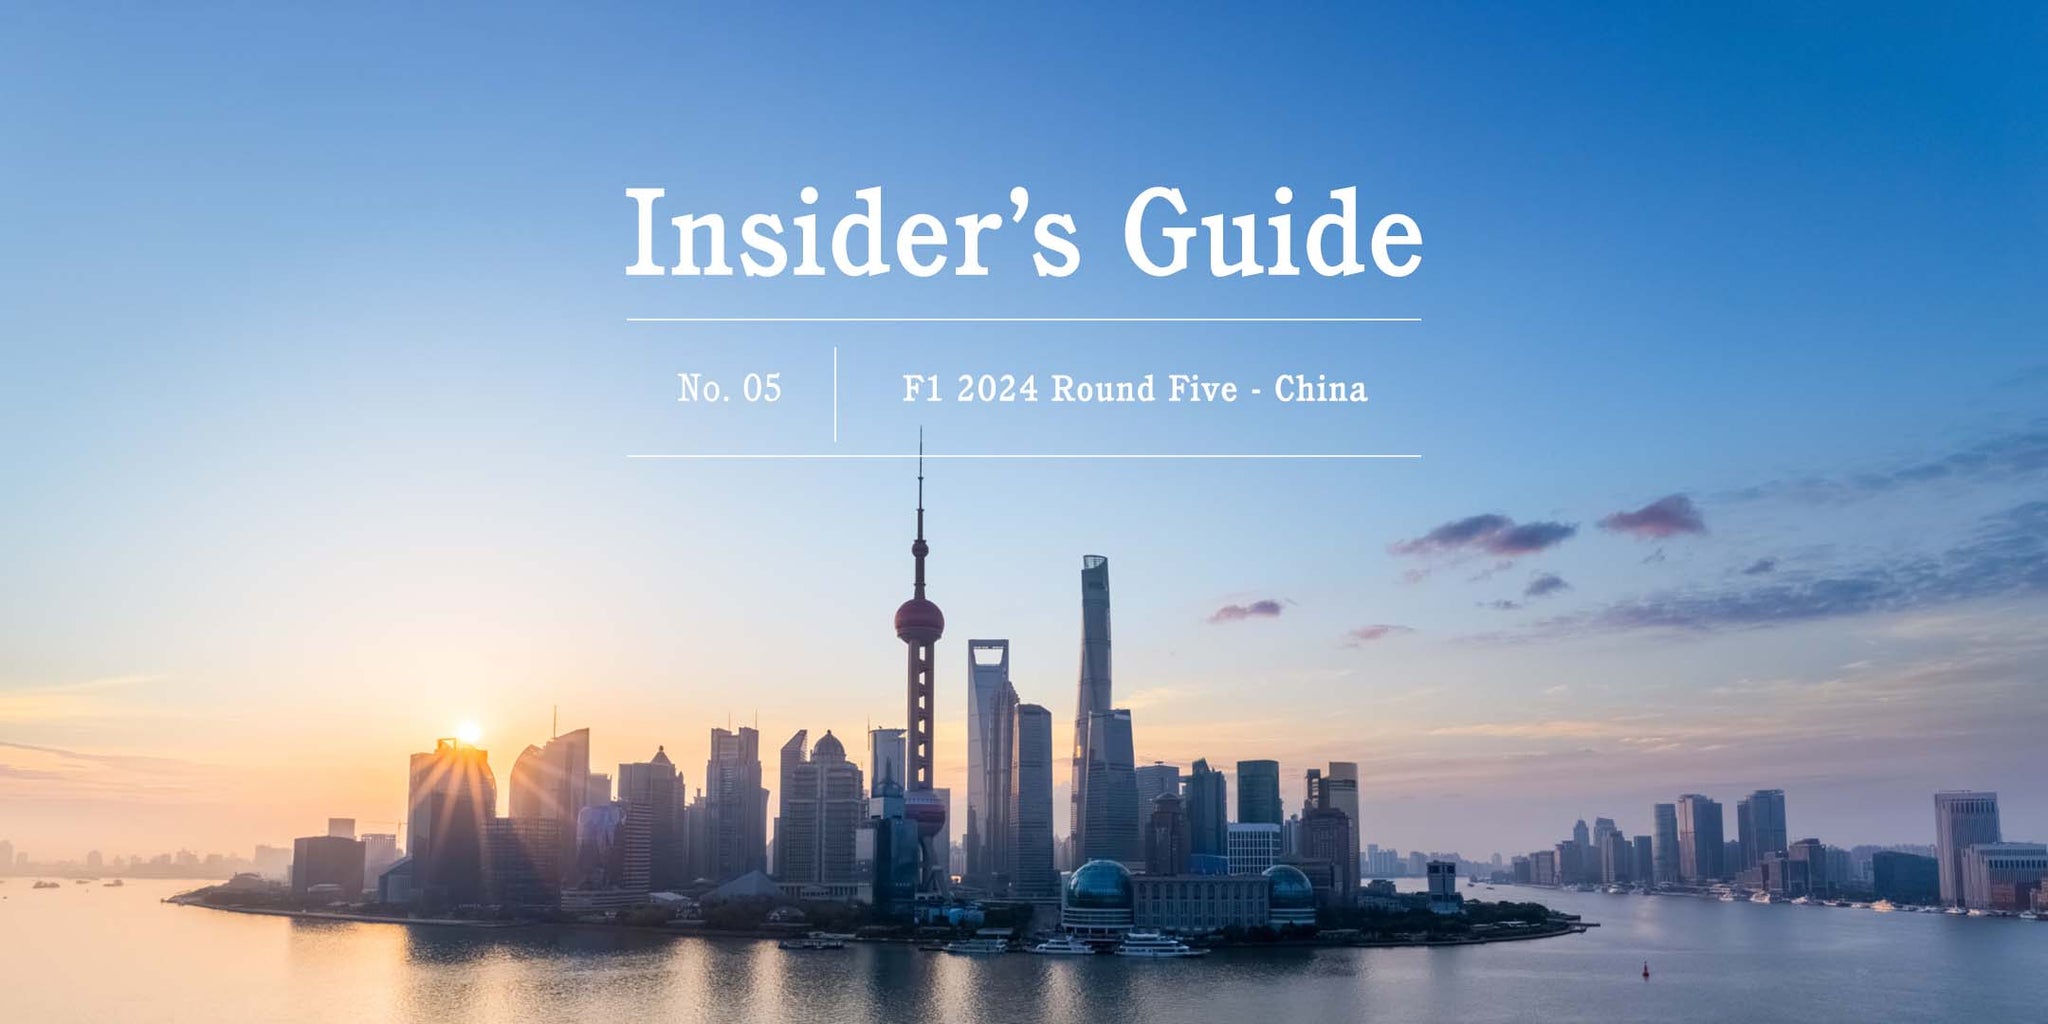 F1-2024-Insider-s-Guide-No.-05-China - GLOBE-TROTTER